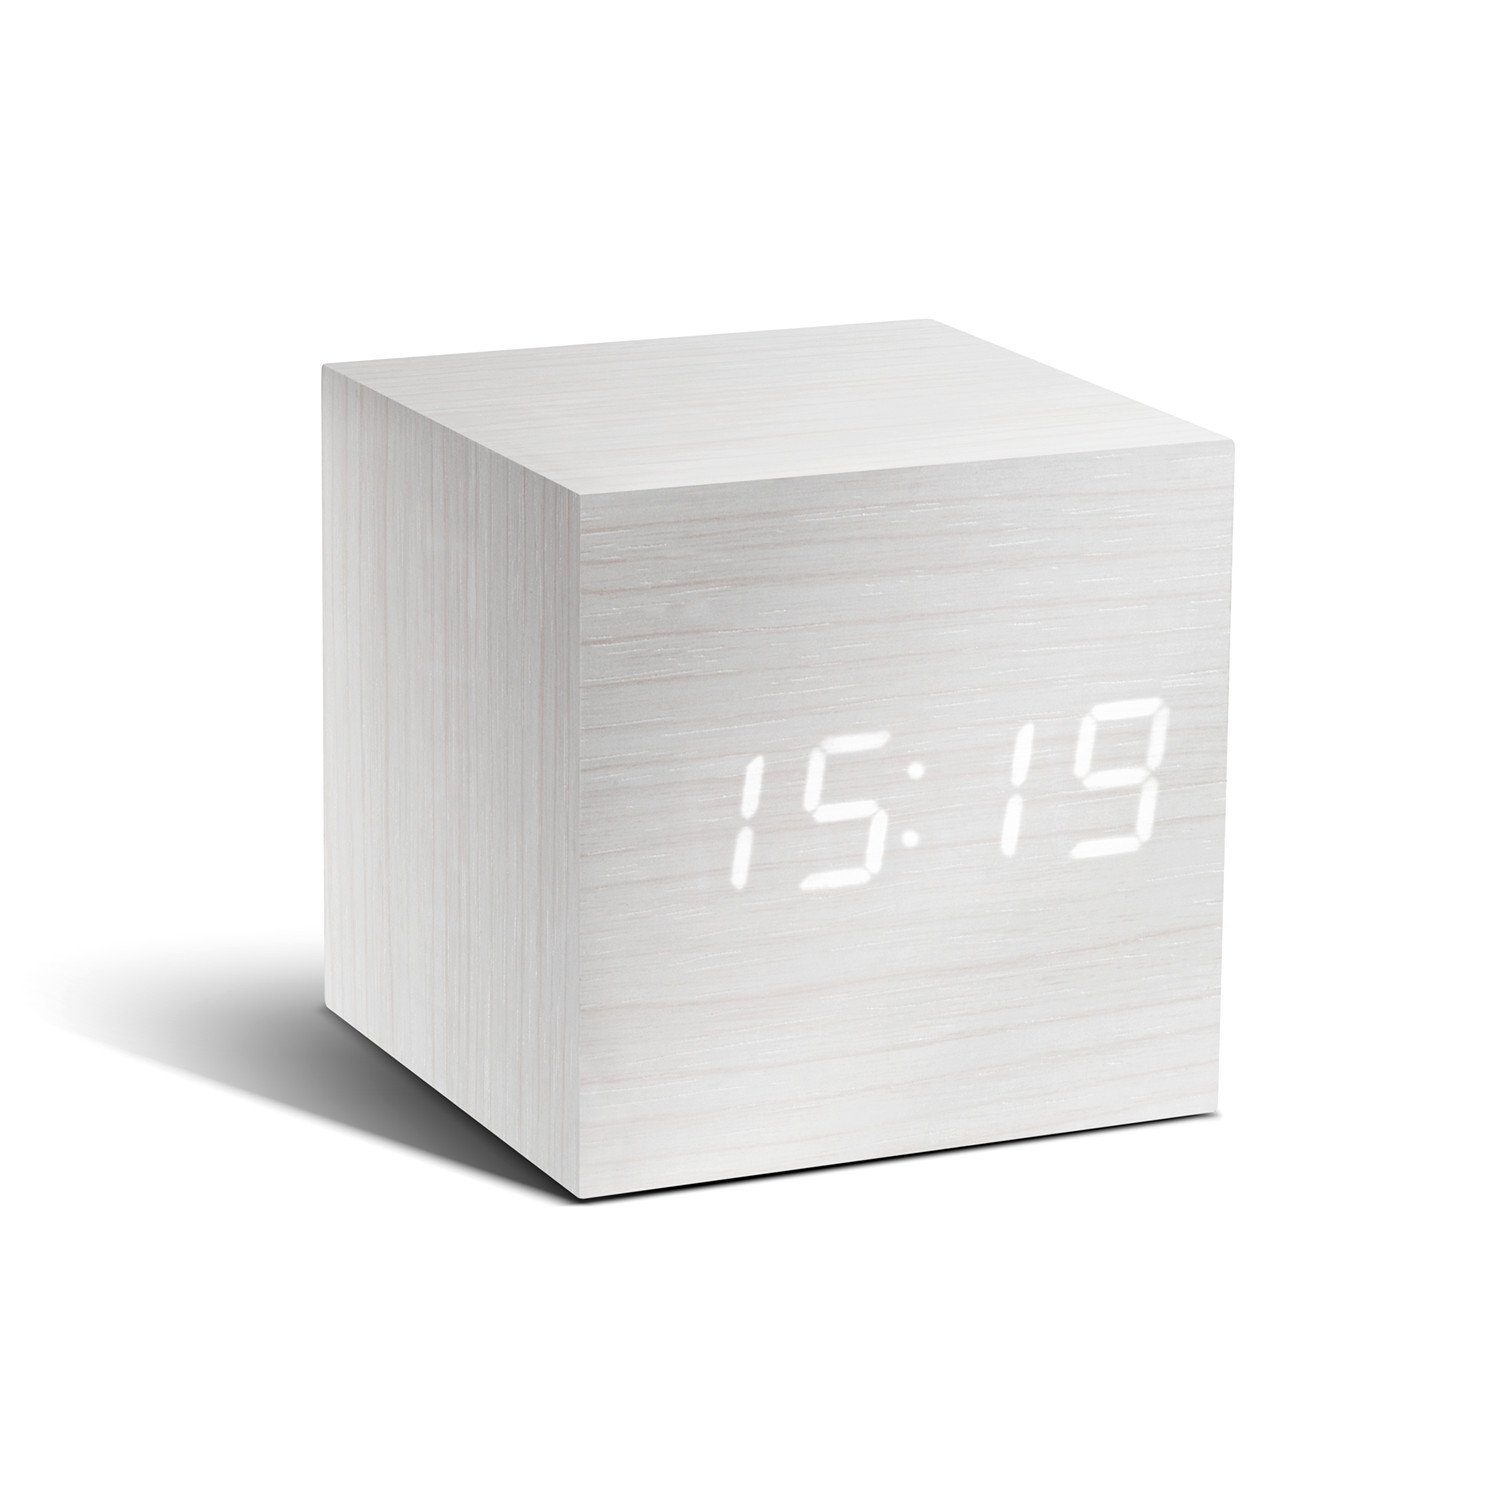 Alarm Bed Clock Cube Black Wood Style LED Temp Minimalist Table Home Decor Room 